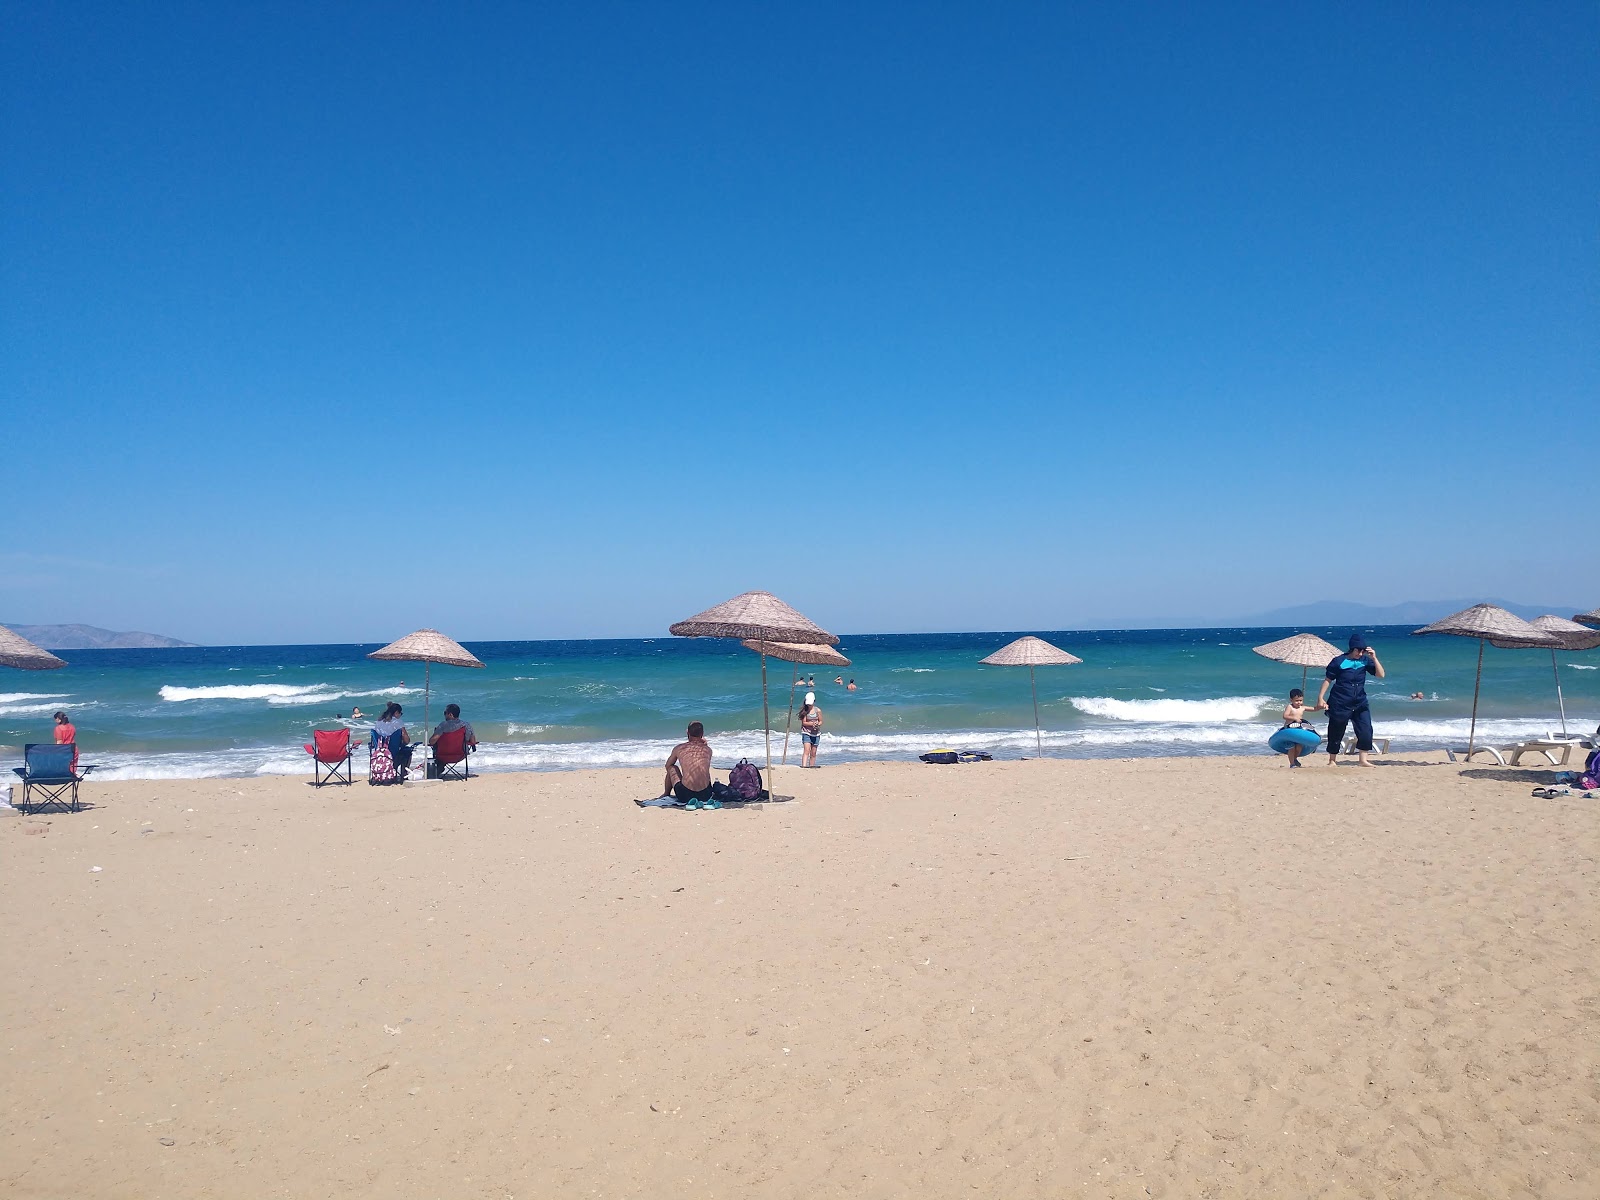 Fotografie cu Kusadasi beach cu nivelul de curățenie in medie